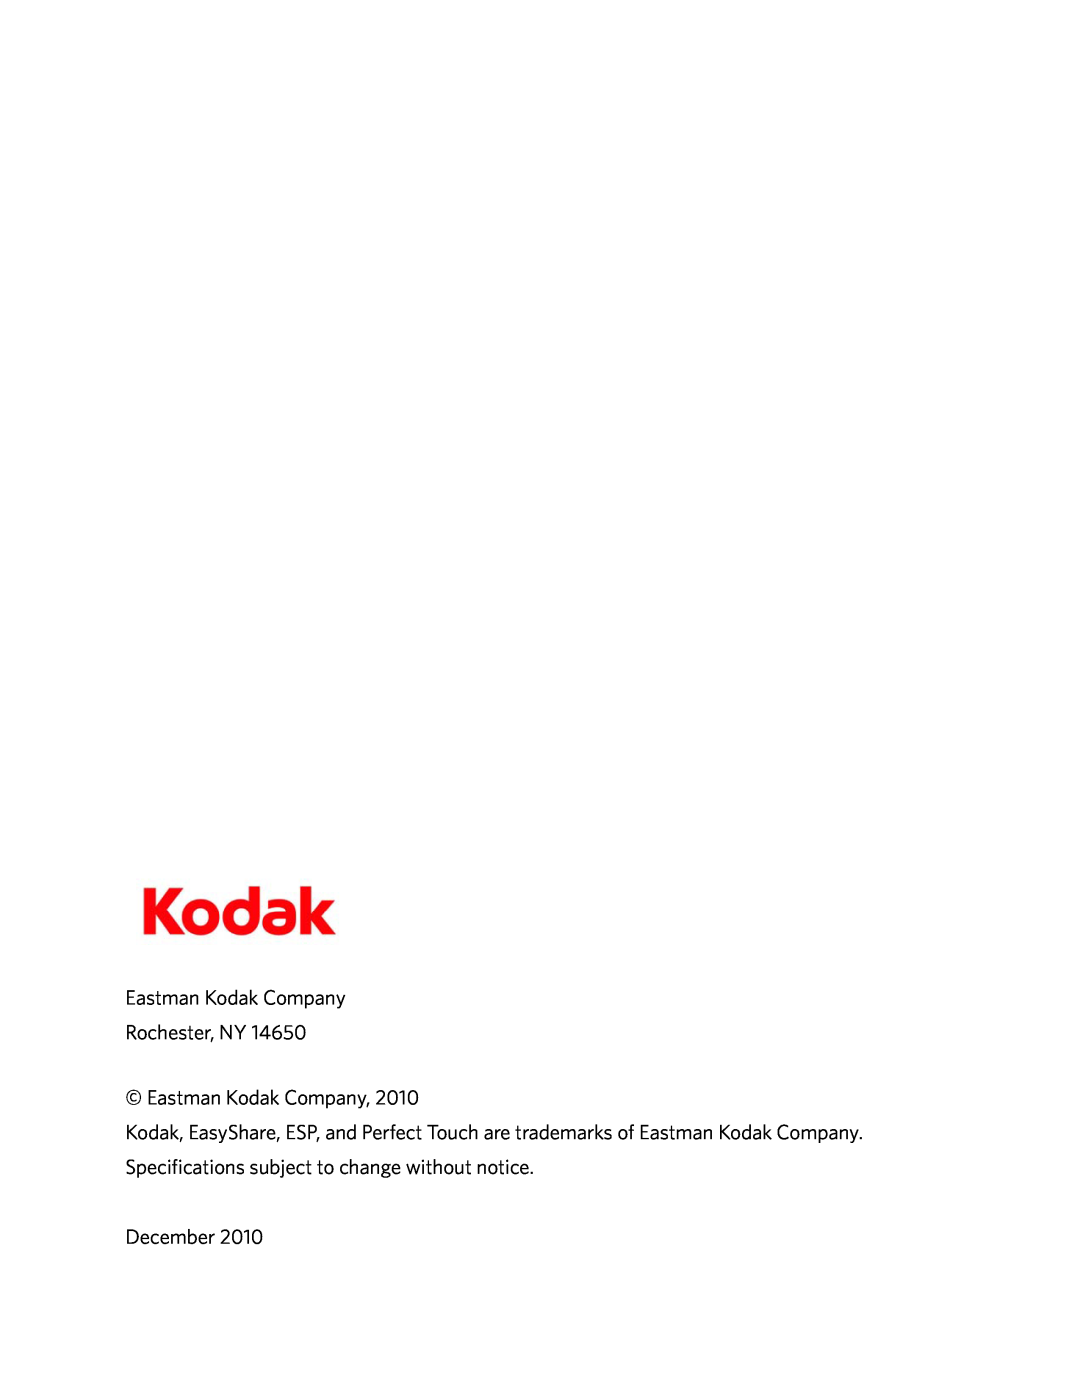 Kodak C110 manual Eastman Kodak Company Rochester, NY Eastman Kodak Company, December 